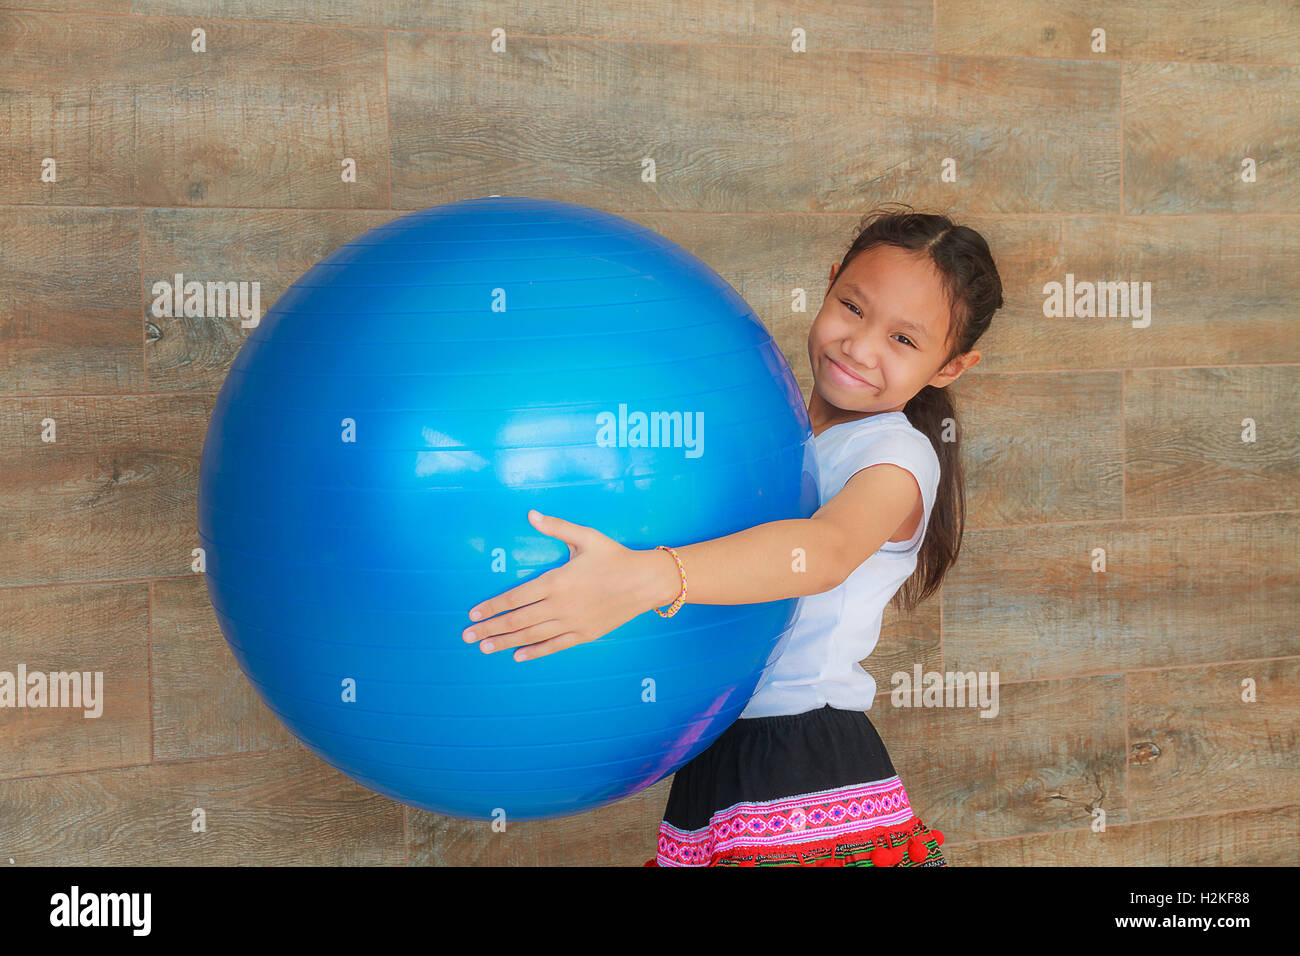 Girl child holding blue big rubber ball. Stock Photo